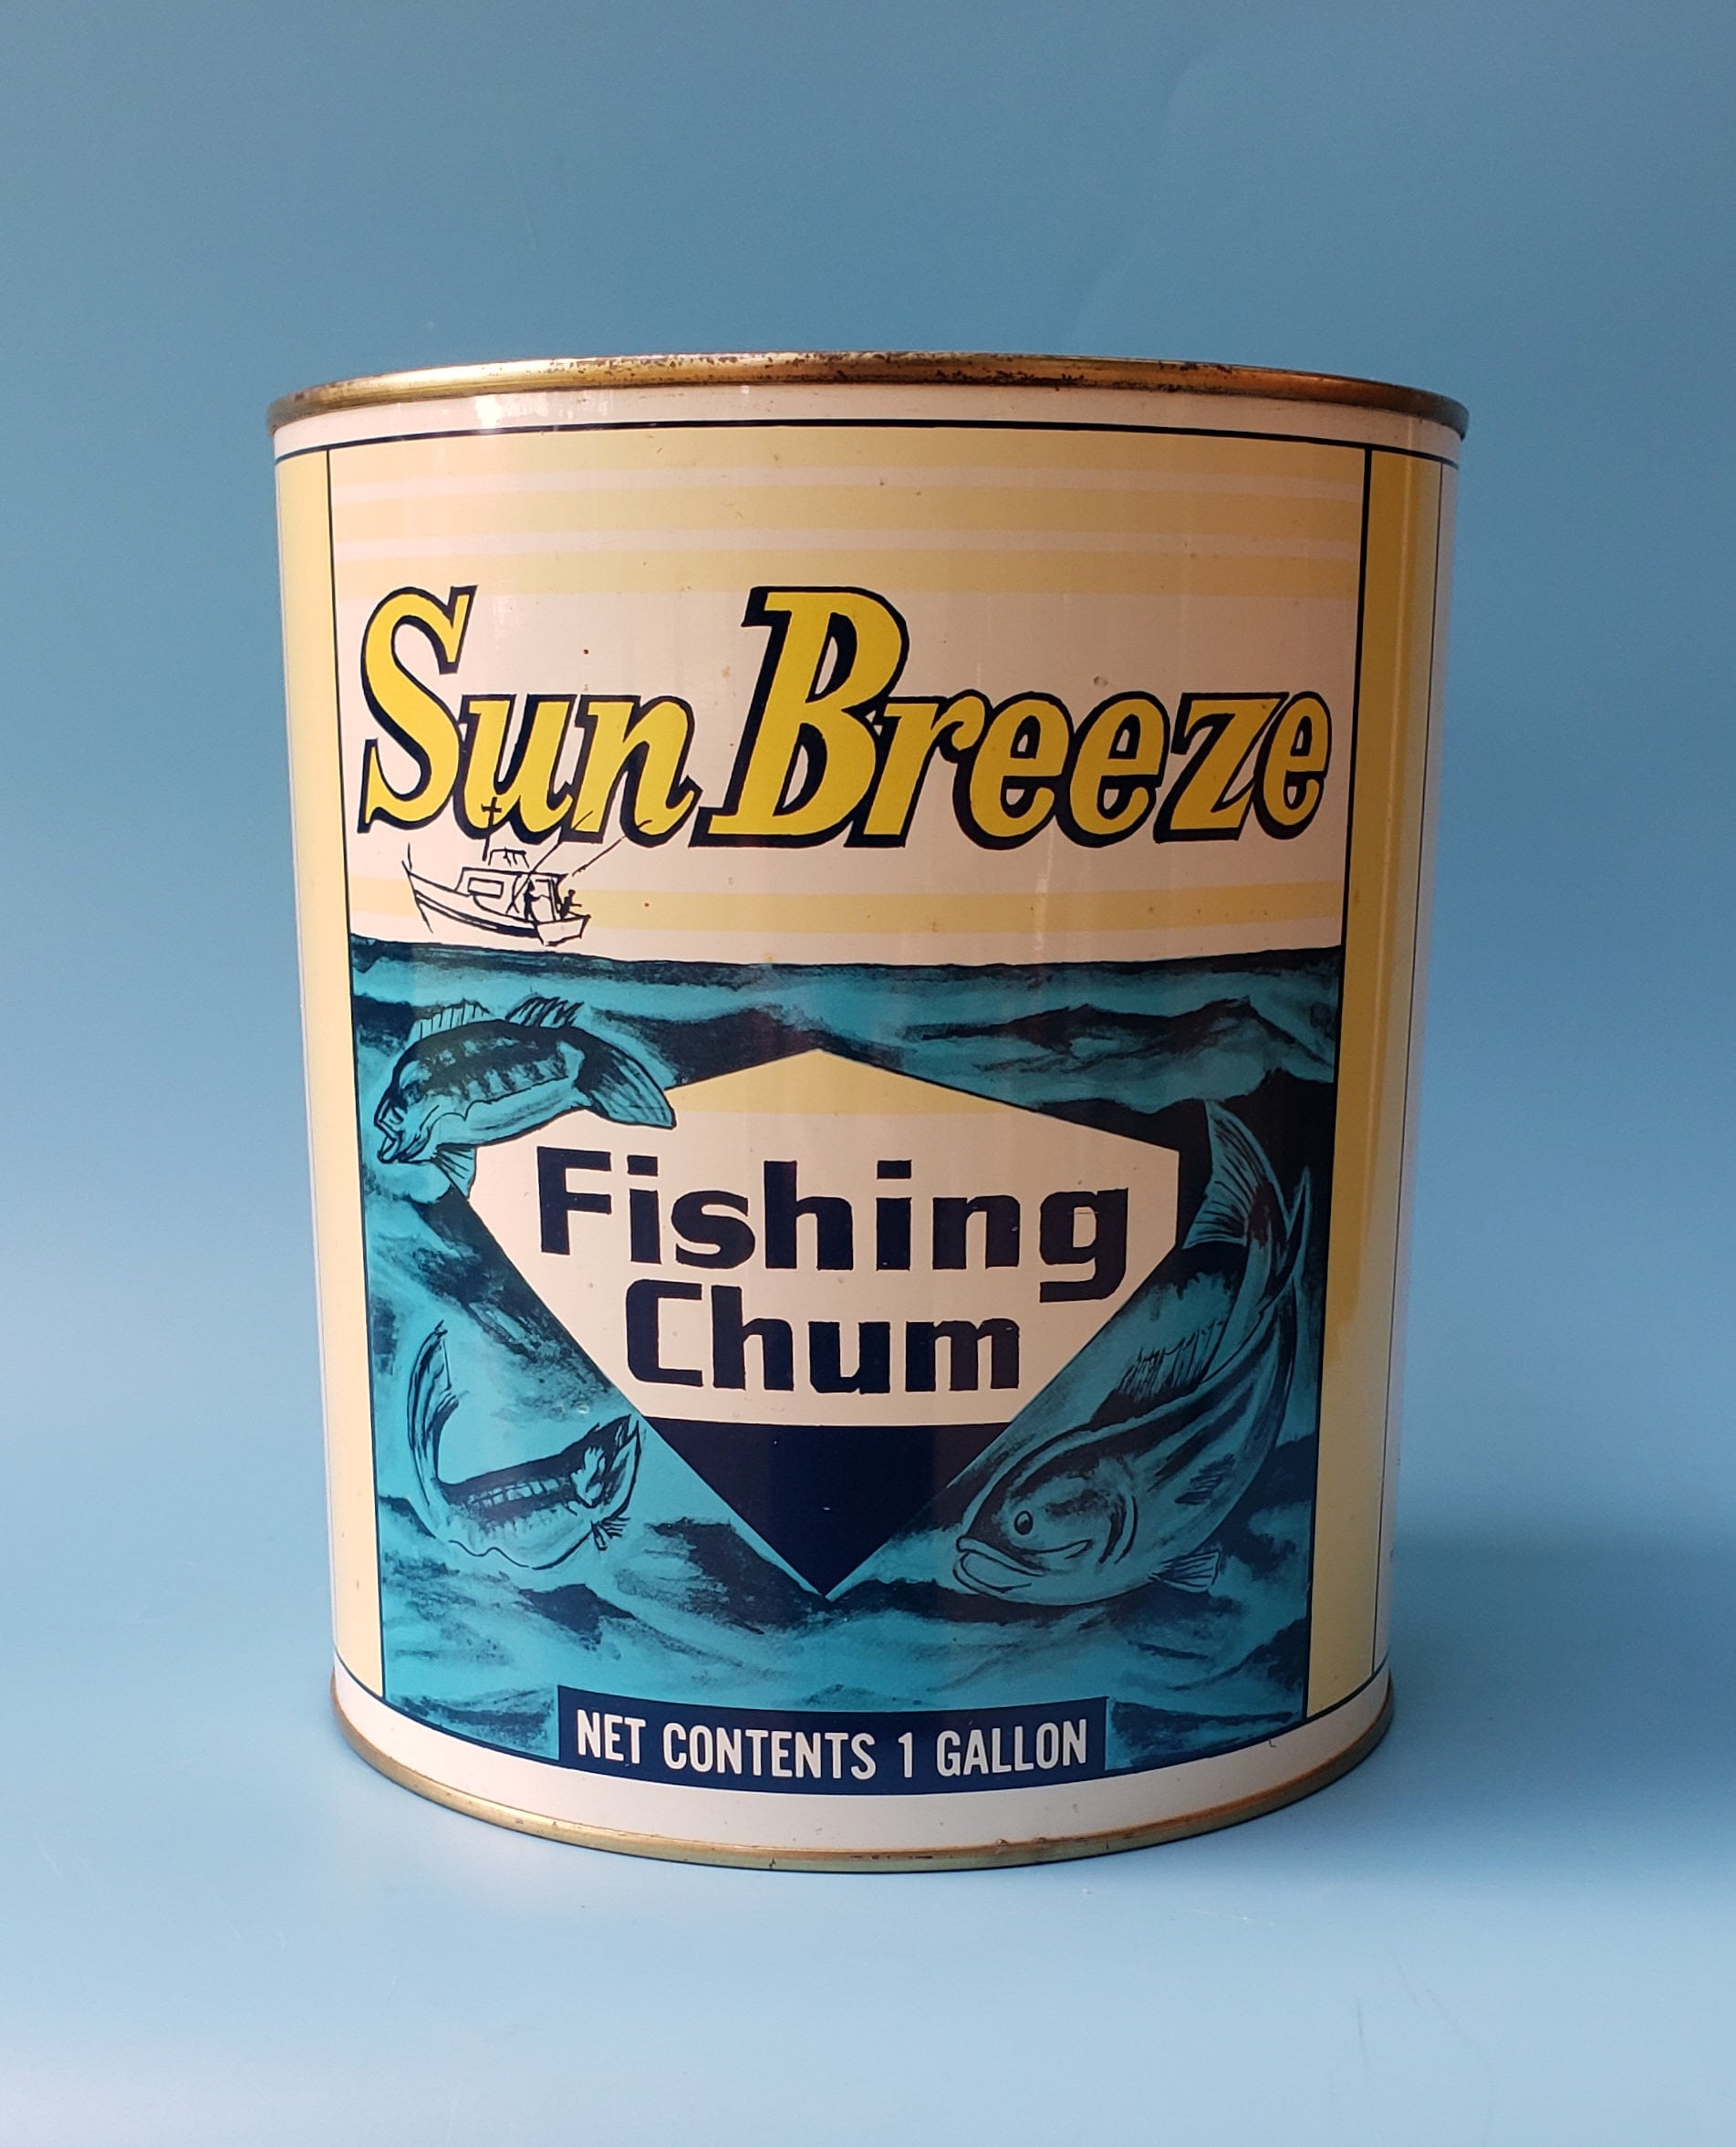 Vintage Can Fishing Sun Breeze Chum Advertising Tin 